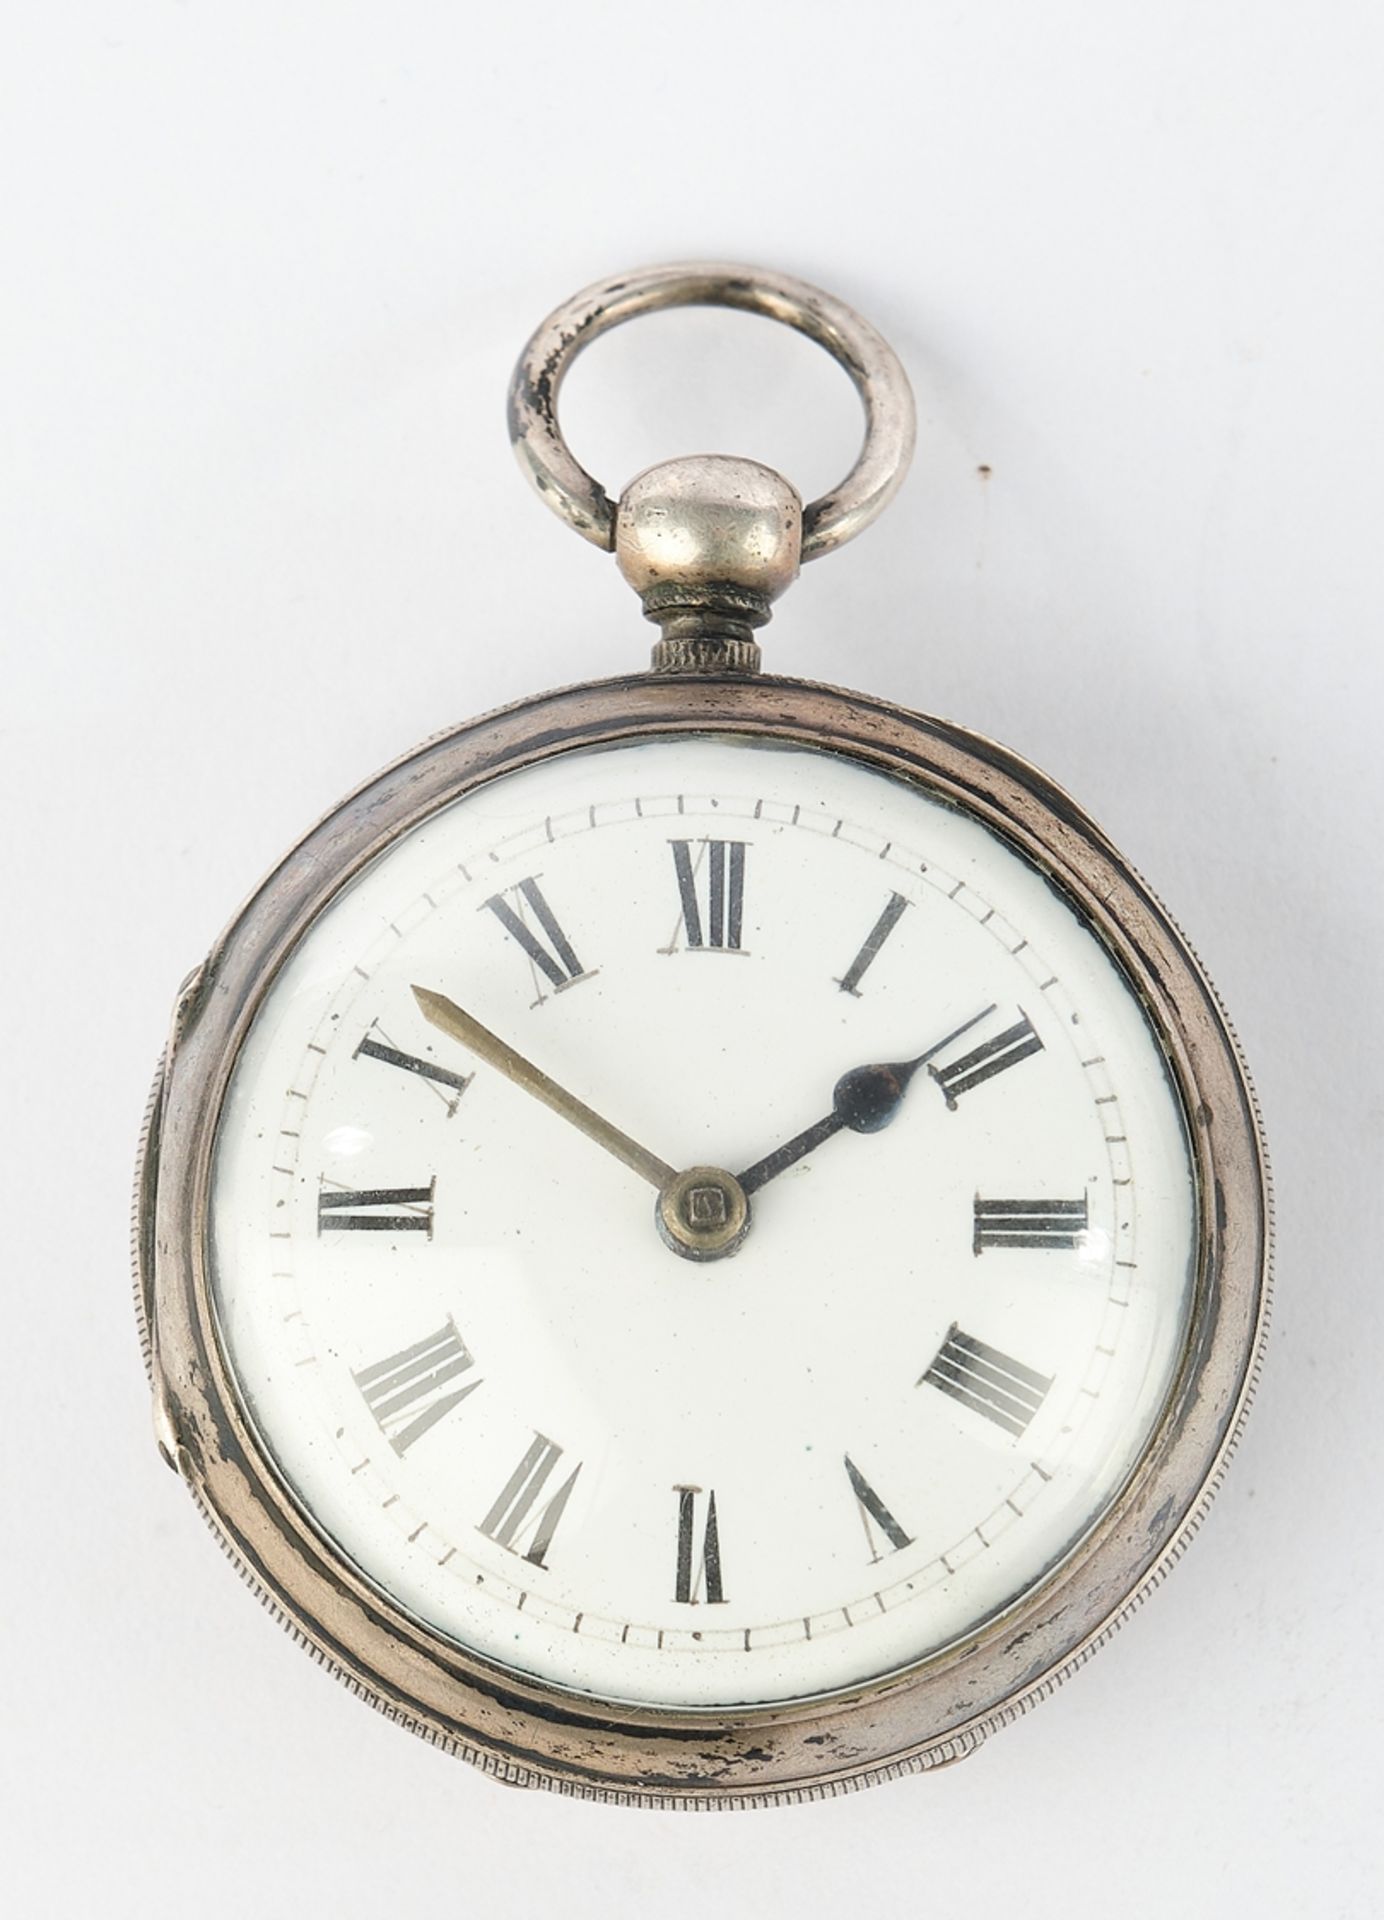 Pocket watch, Switzerland / France, 18th century, silver case, movement sign. "Tschiffely / Saine",